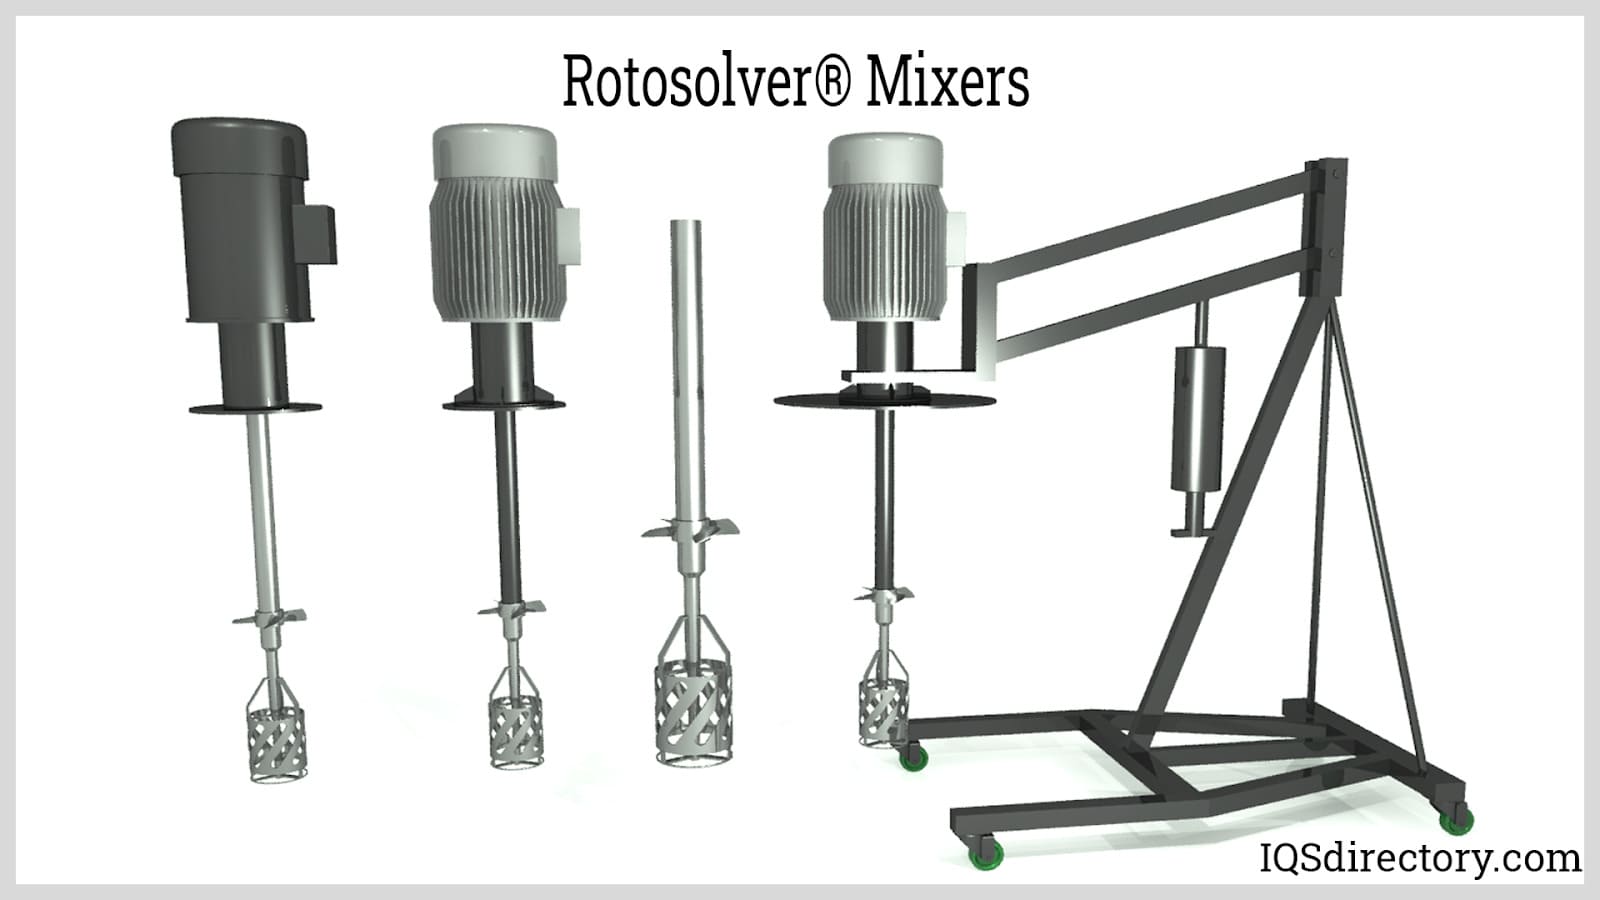 https://www.iqsdirectory.com/articles/mixer/high-shear-mixer/rotosolver-mixers.jpg